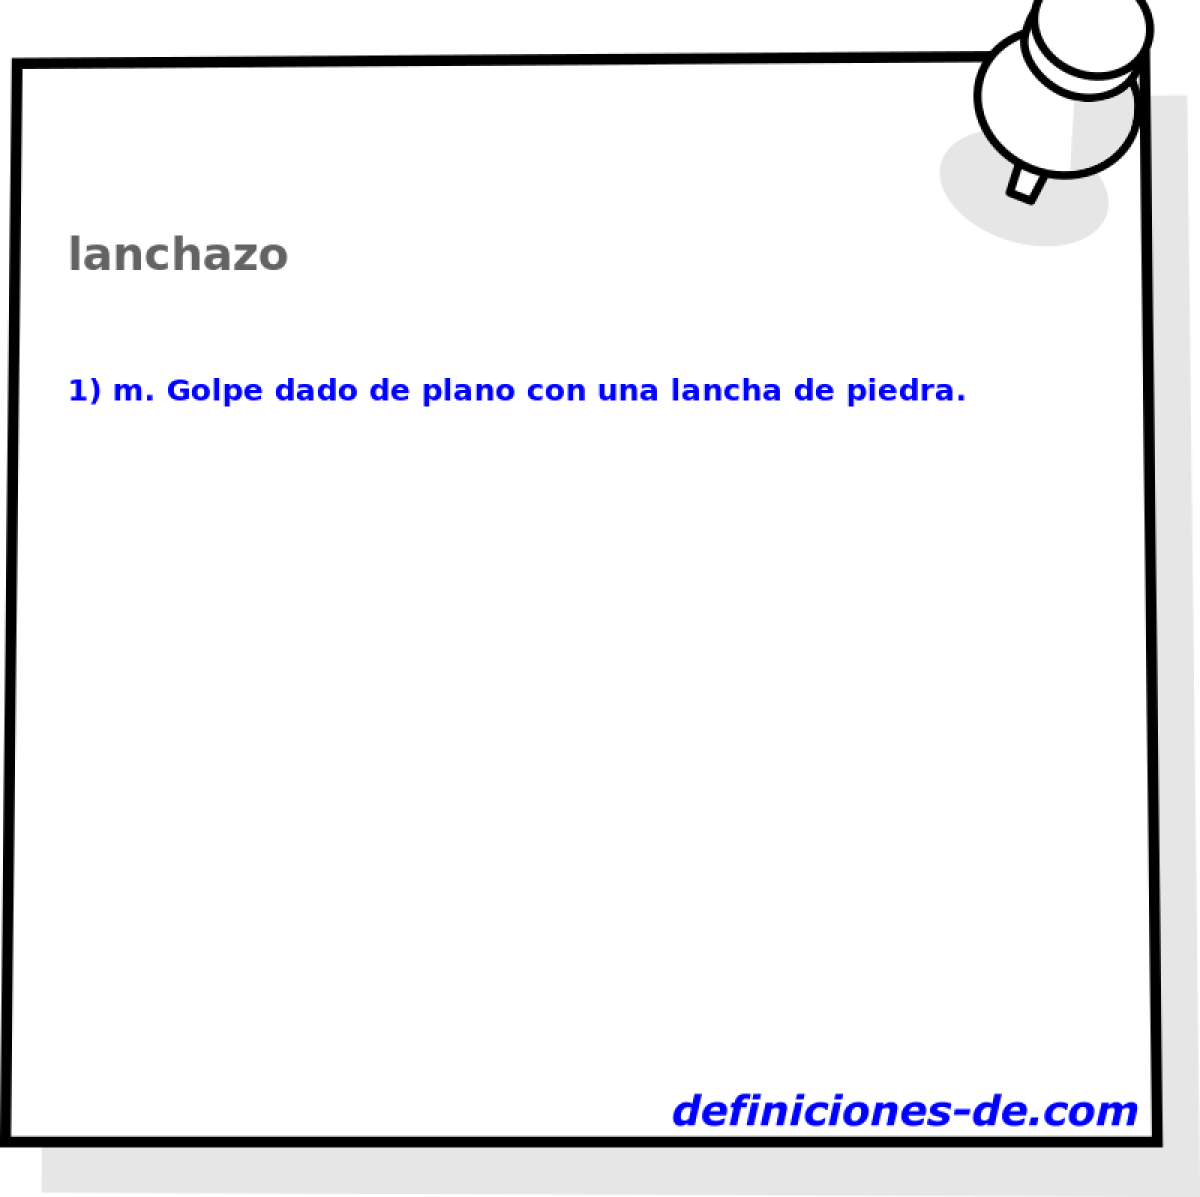 lanchazo 